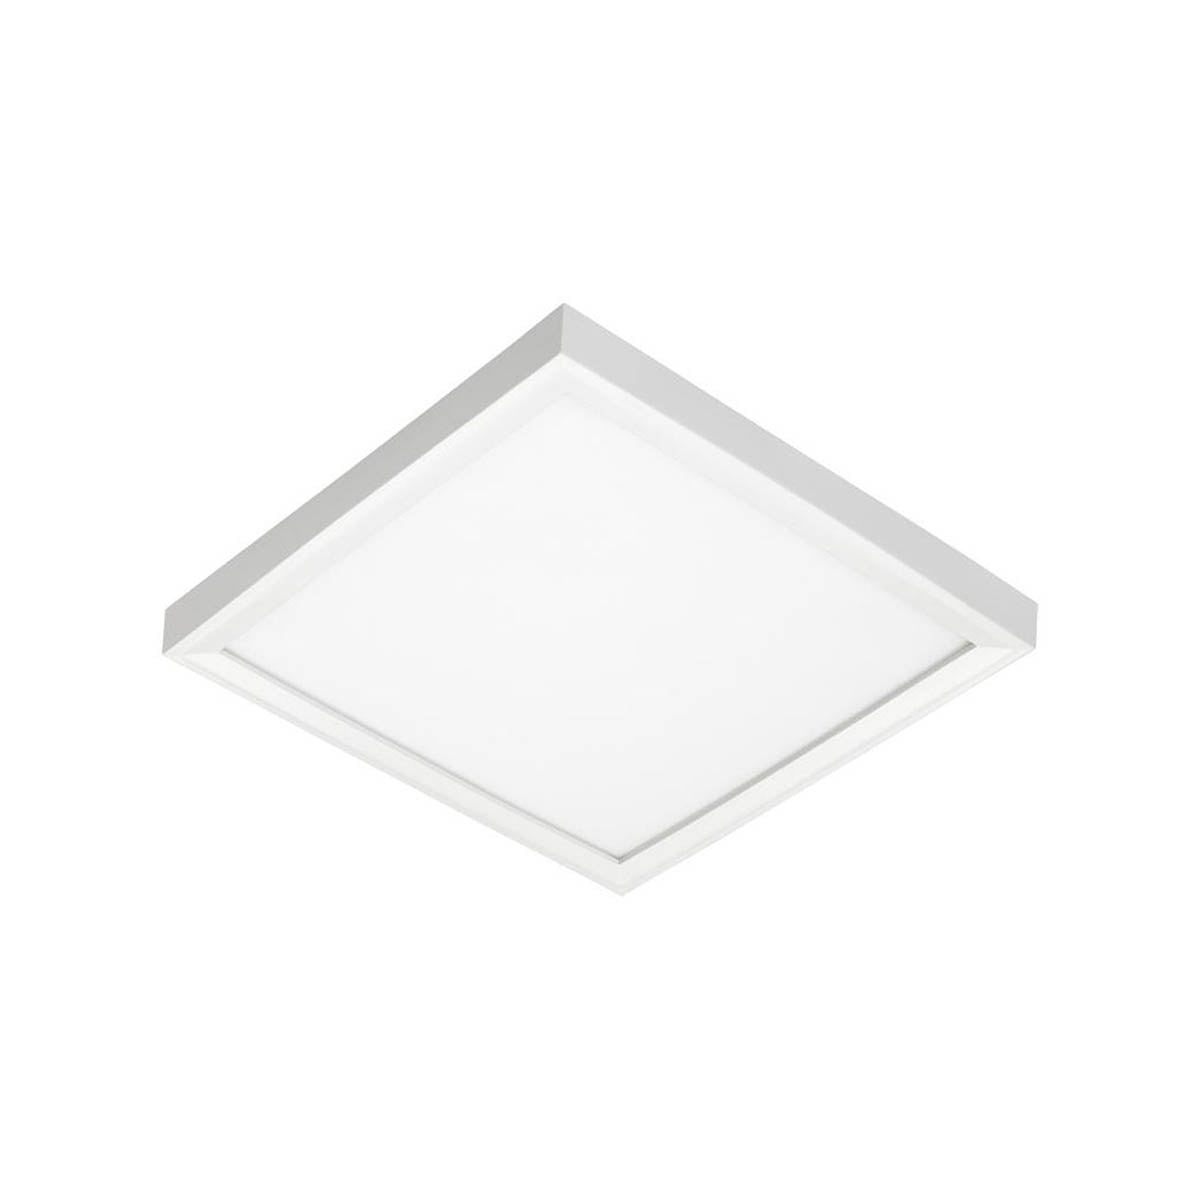 JSFSQ 5 In LED Square Disk Light 818 Lumens Selectable CCT 120V White Finish